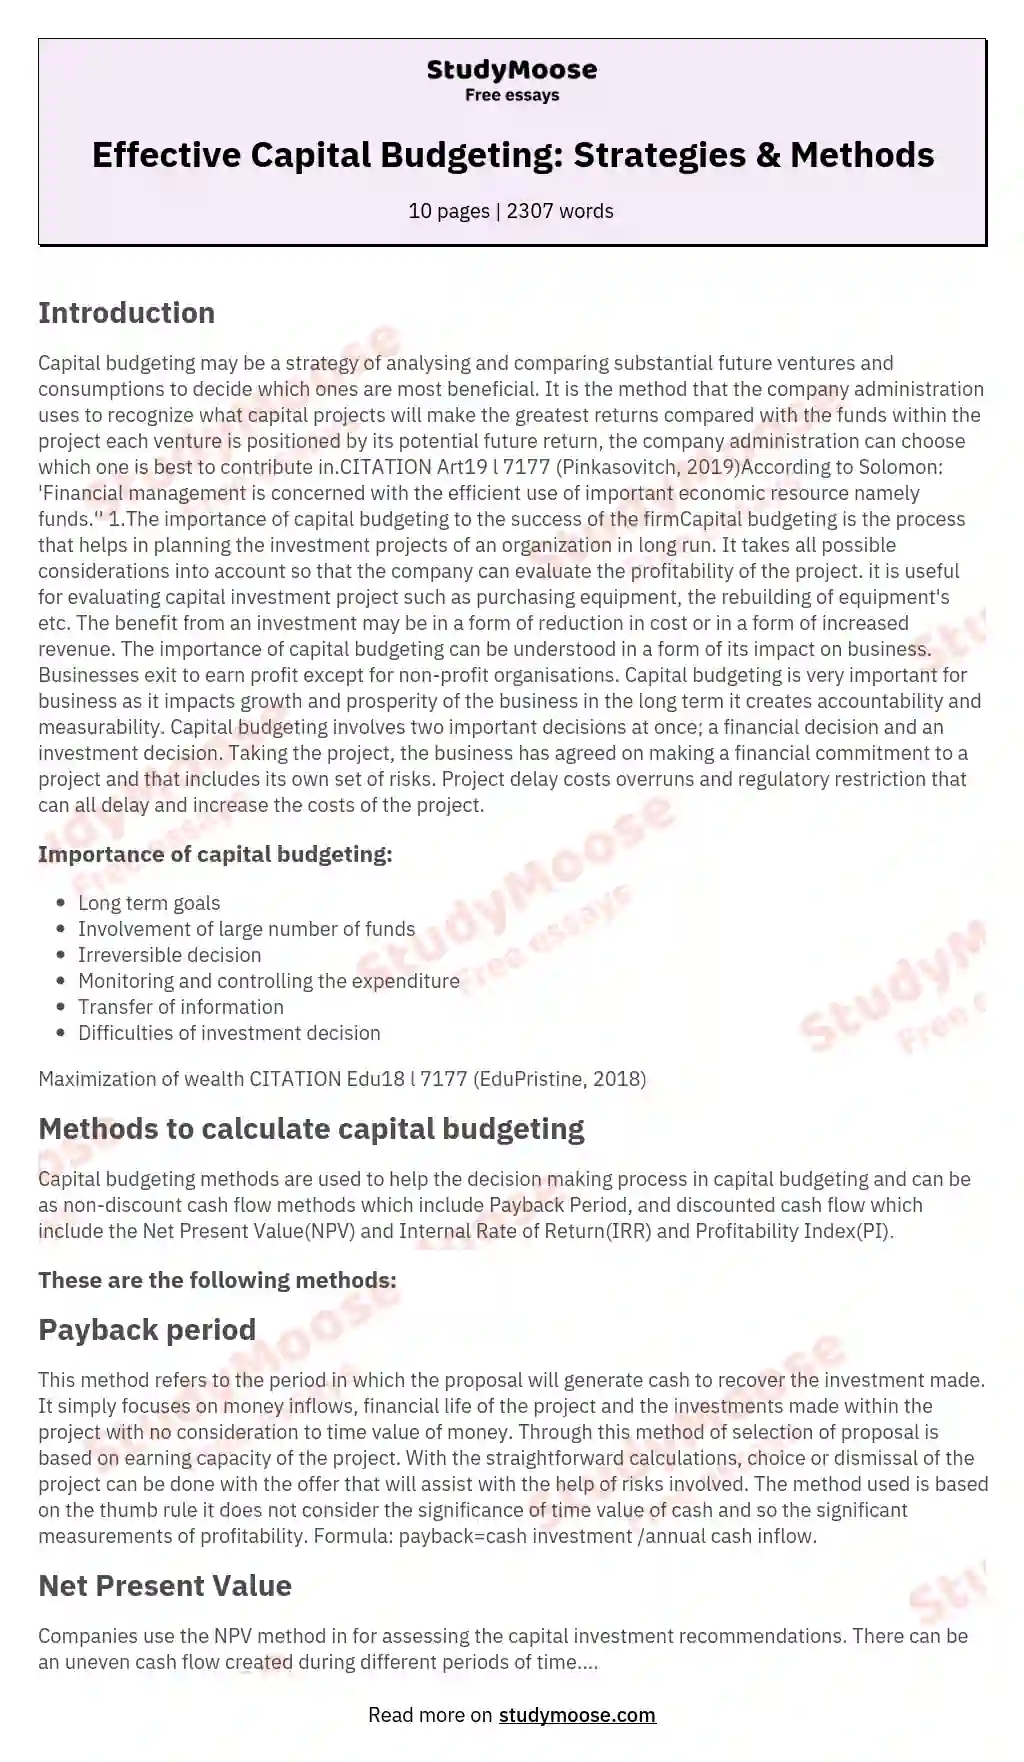 Effective Capital Budgeting: Strategies & Methods essay